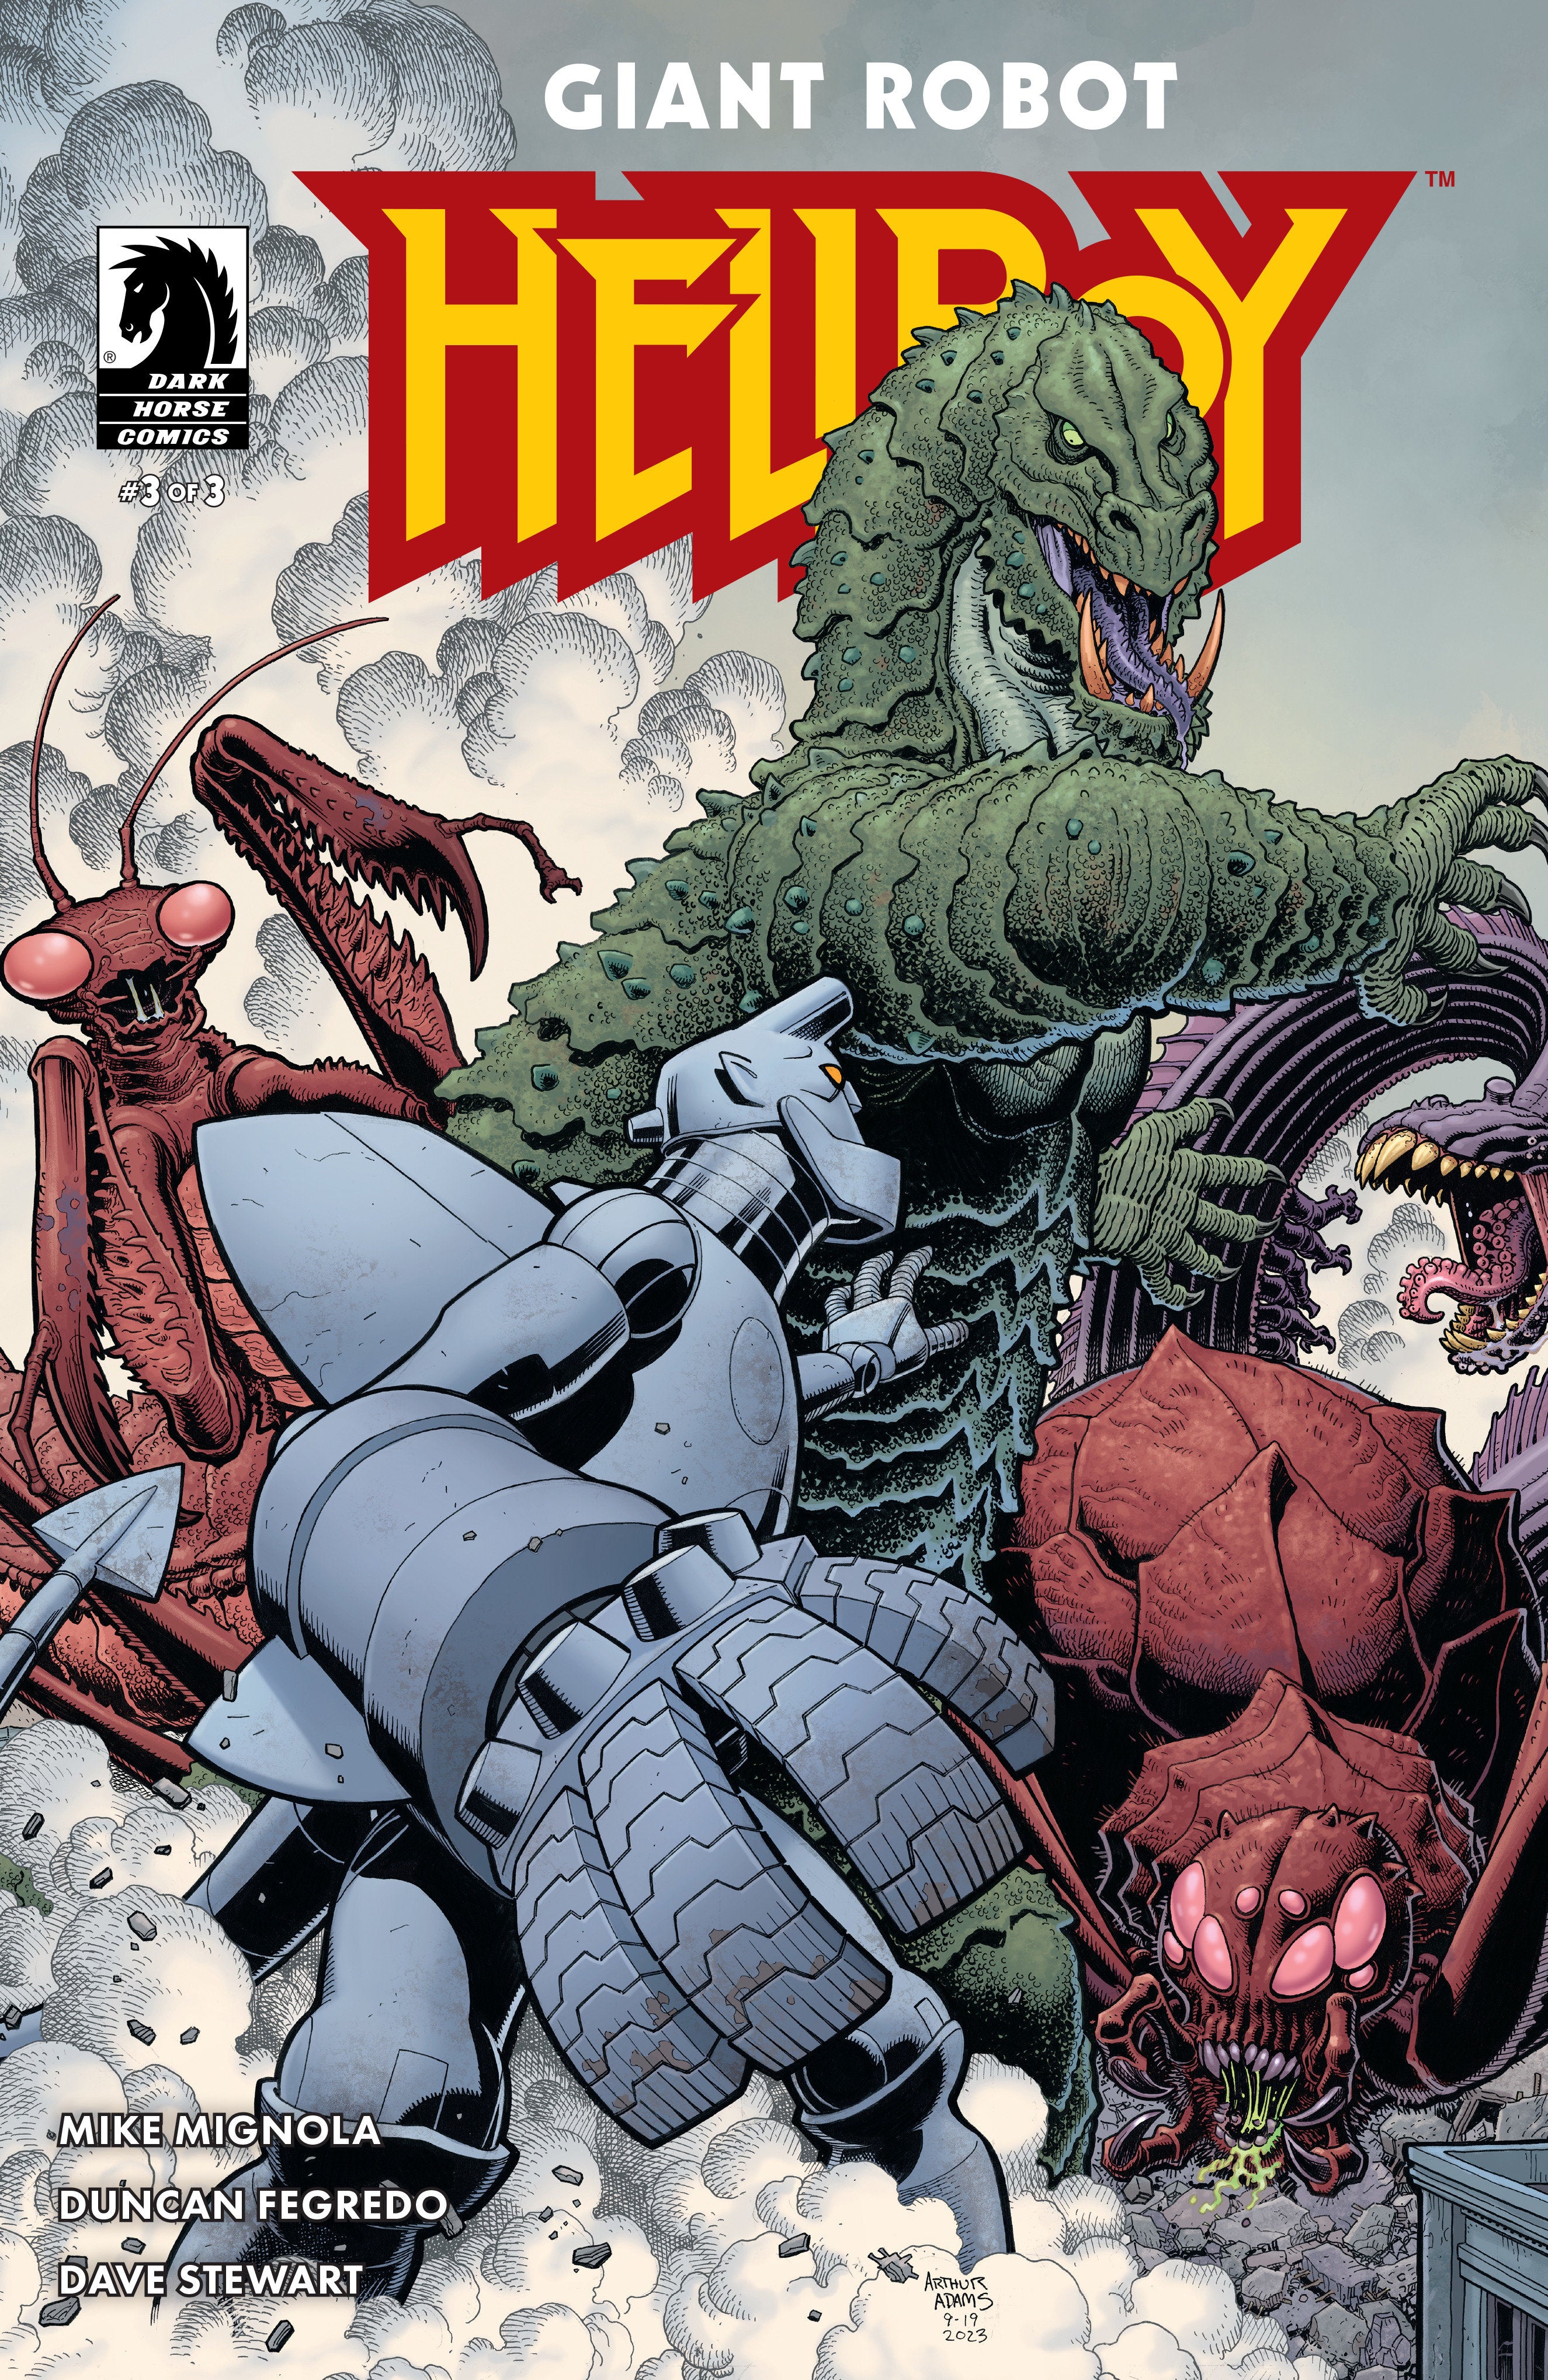 Giant Robot Hellboy #3 (Cover B) (Art Adams)